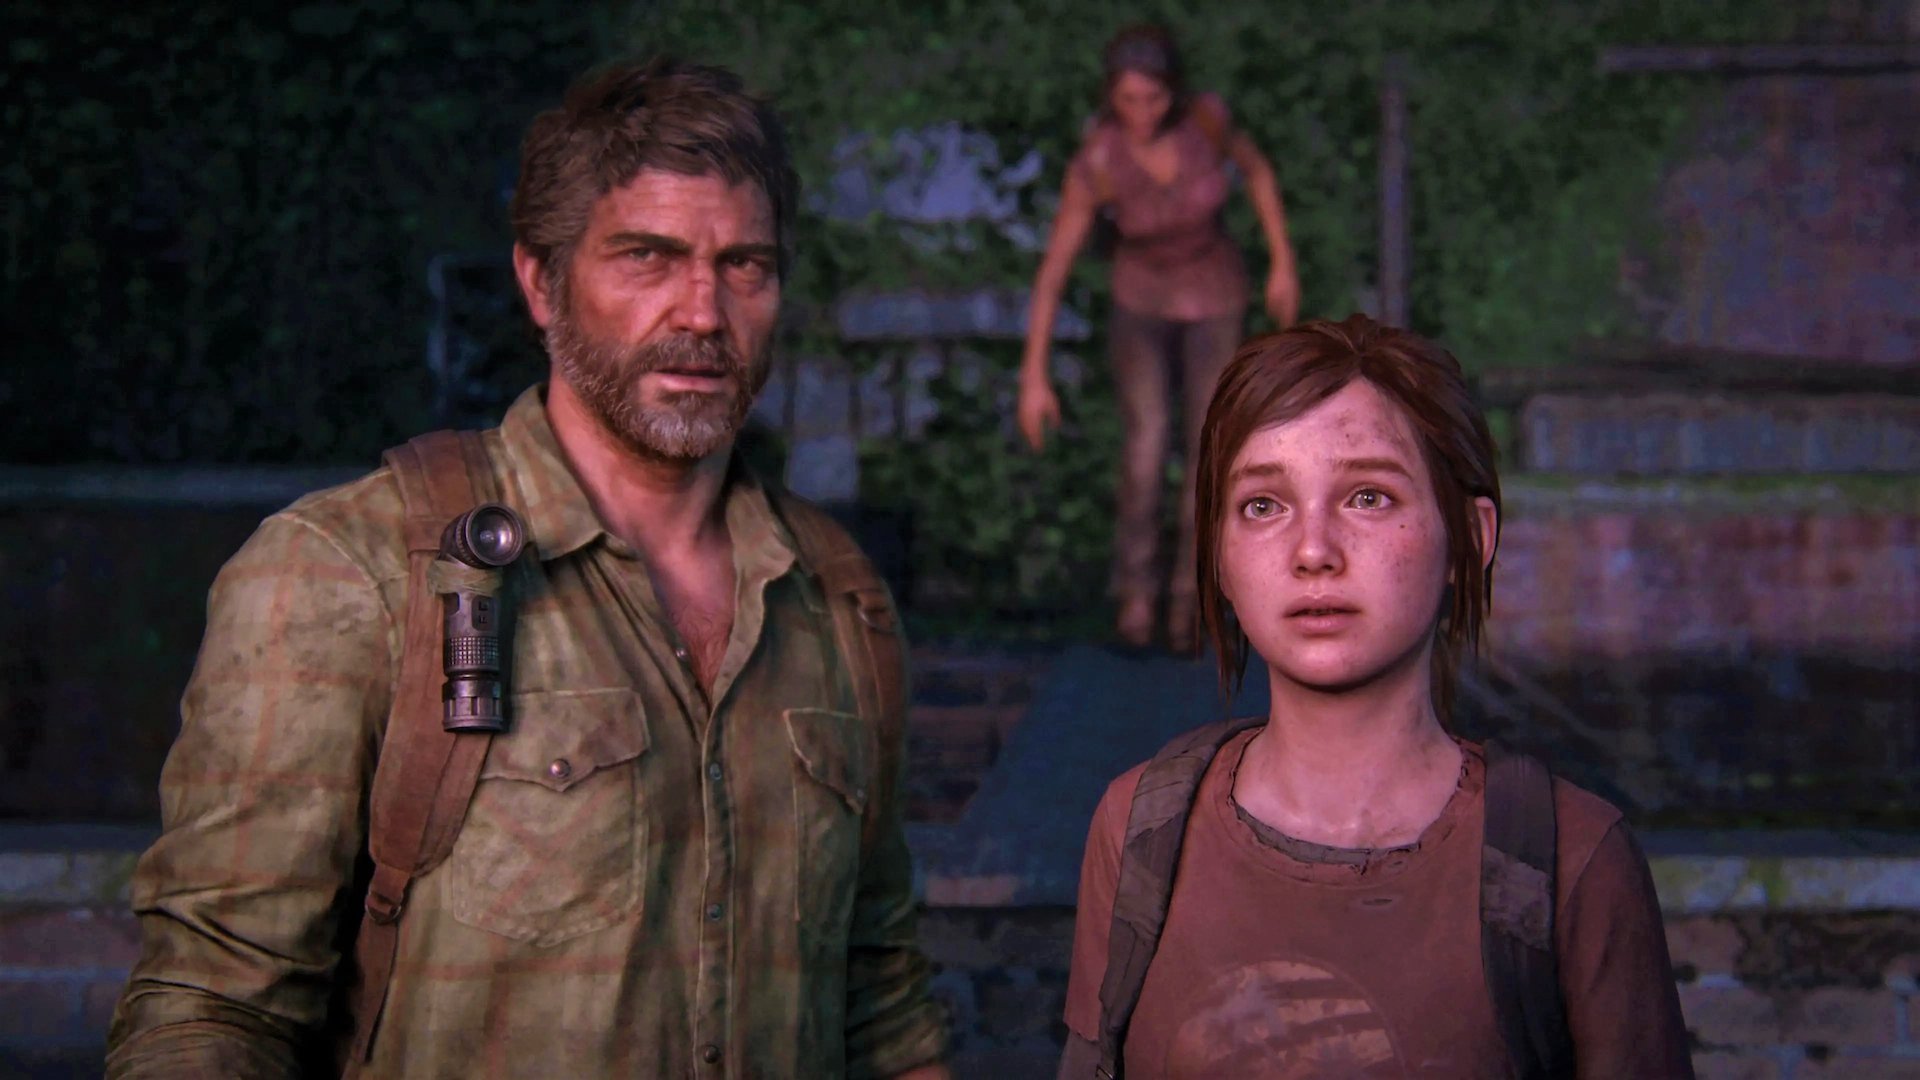 Principal Designer On The Last Of Us Multiplayer Game Has Left Naughty Dog - Blog - News